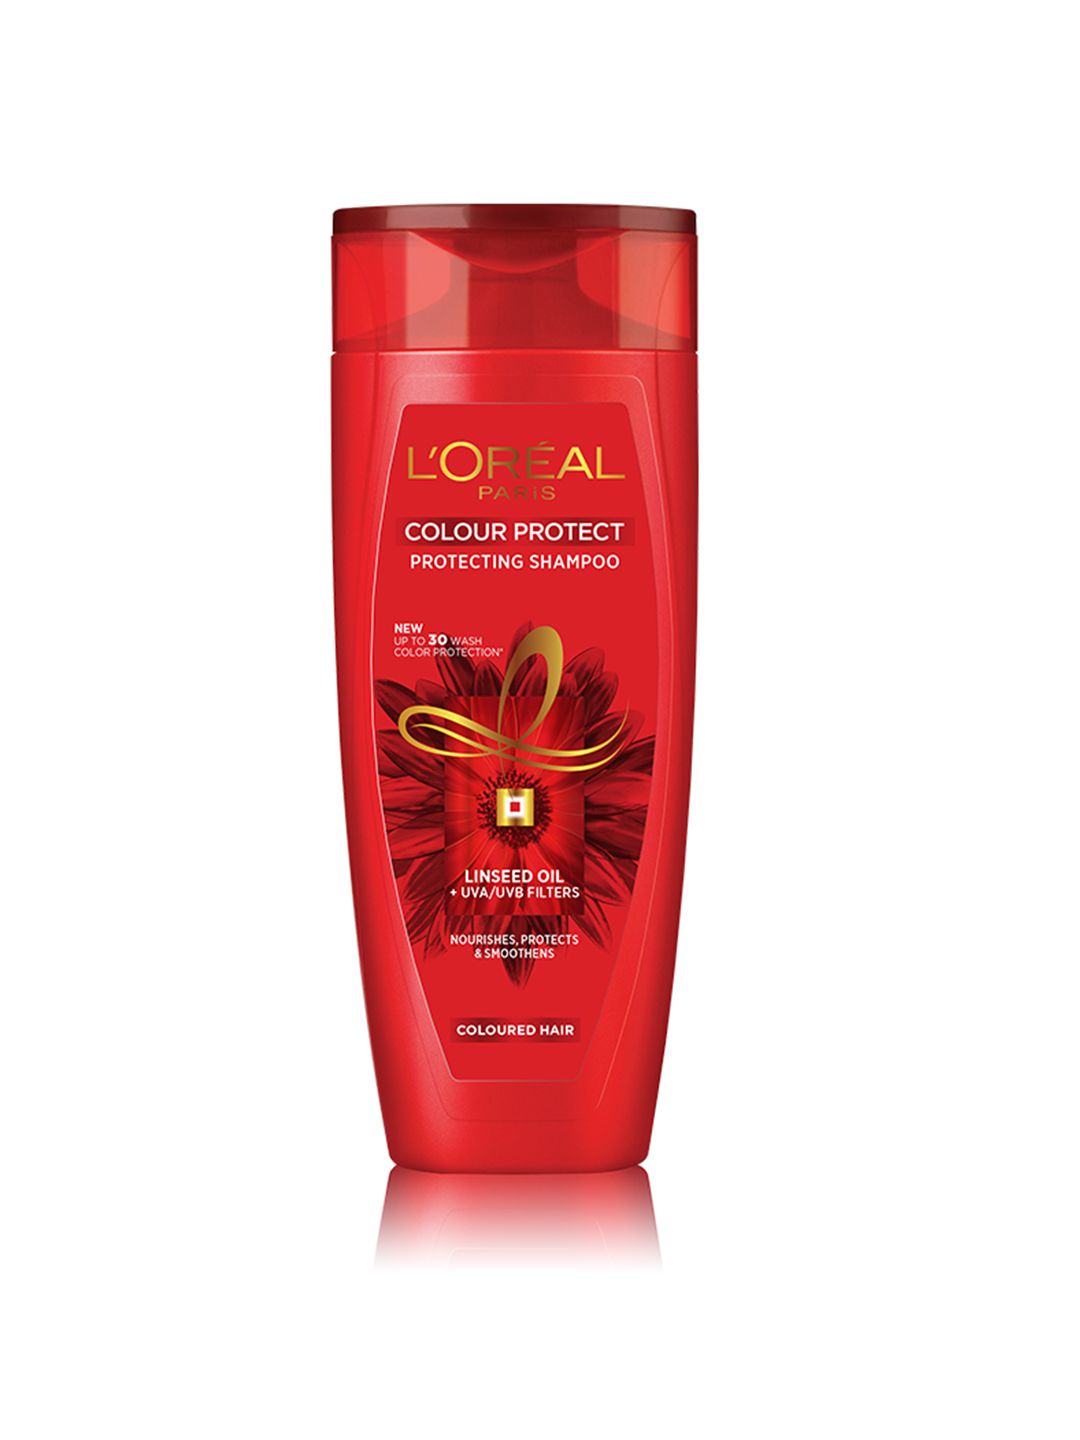 LOreal Paris Color Protect Shampoo - 192.5ml Price in India